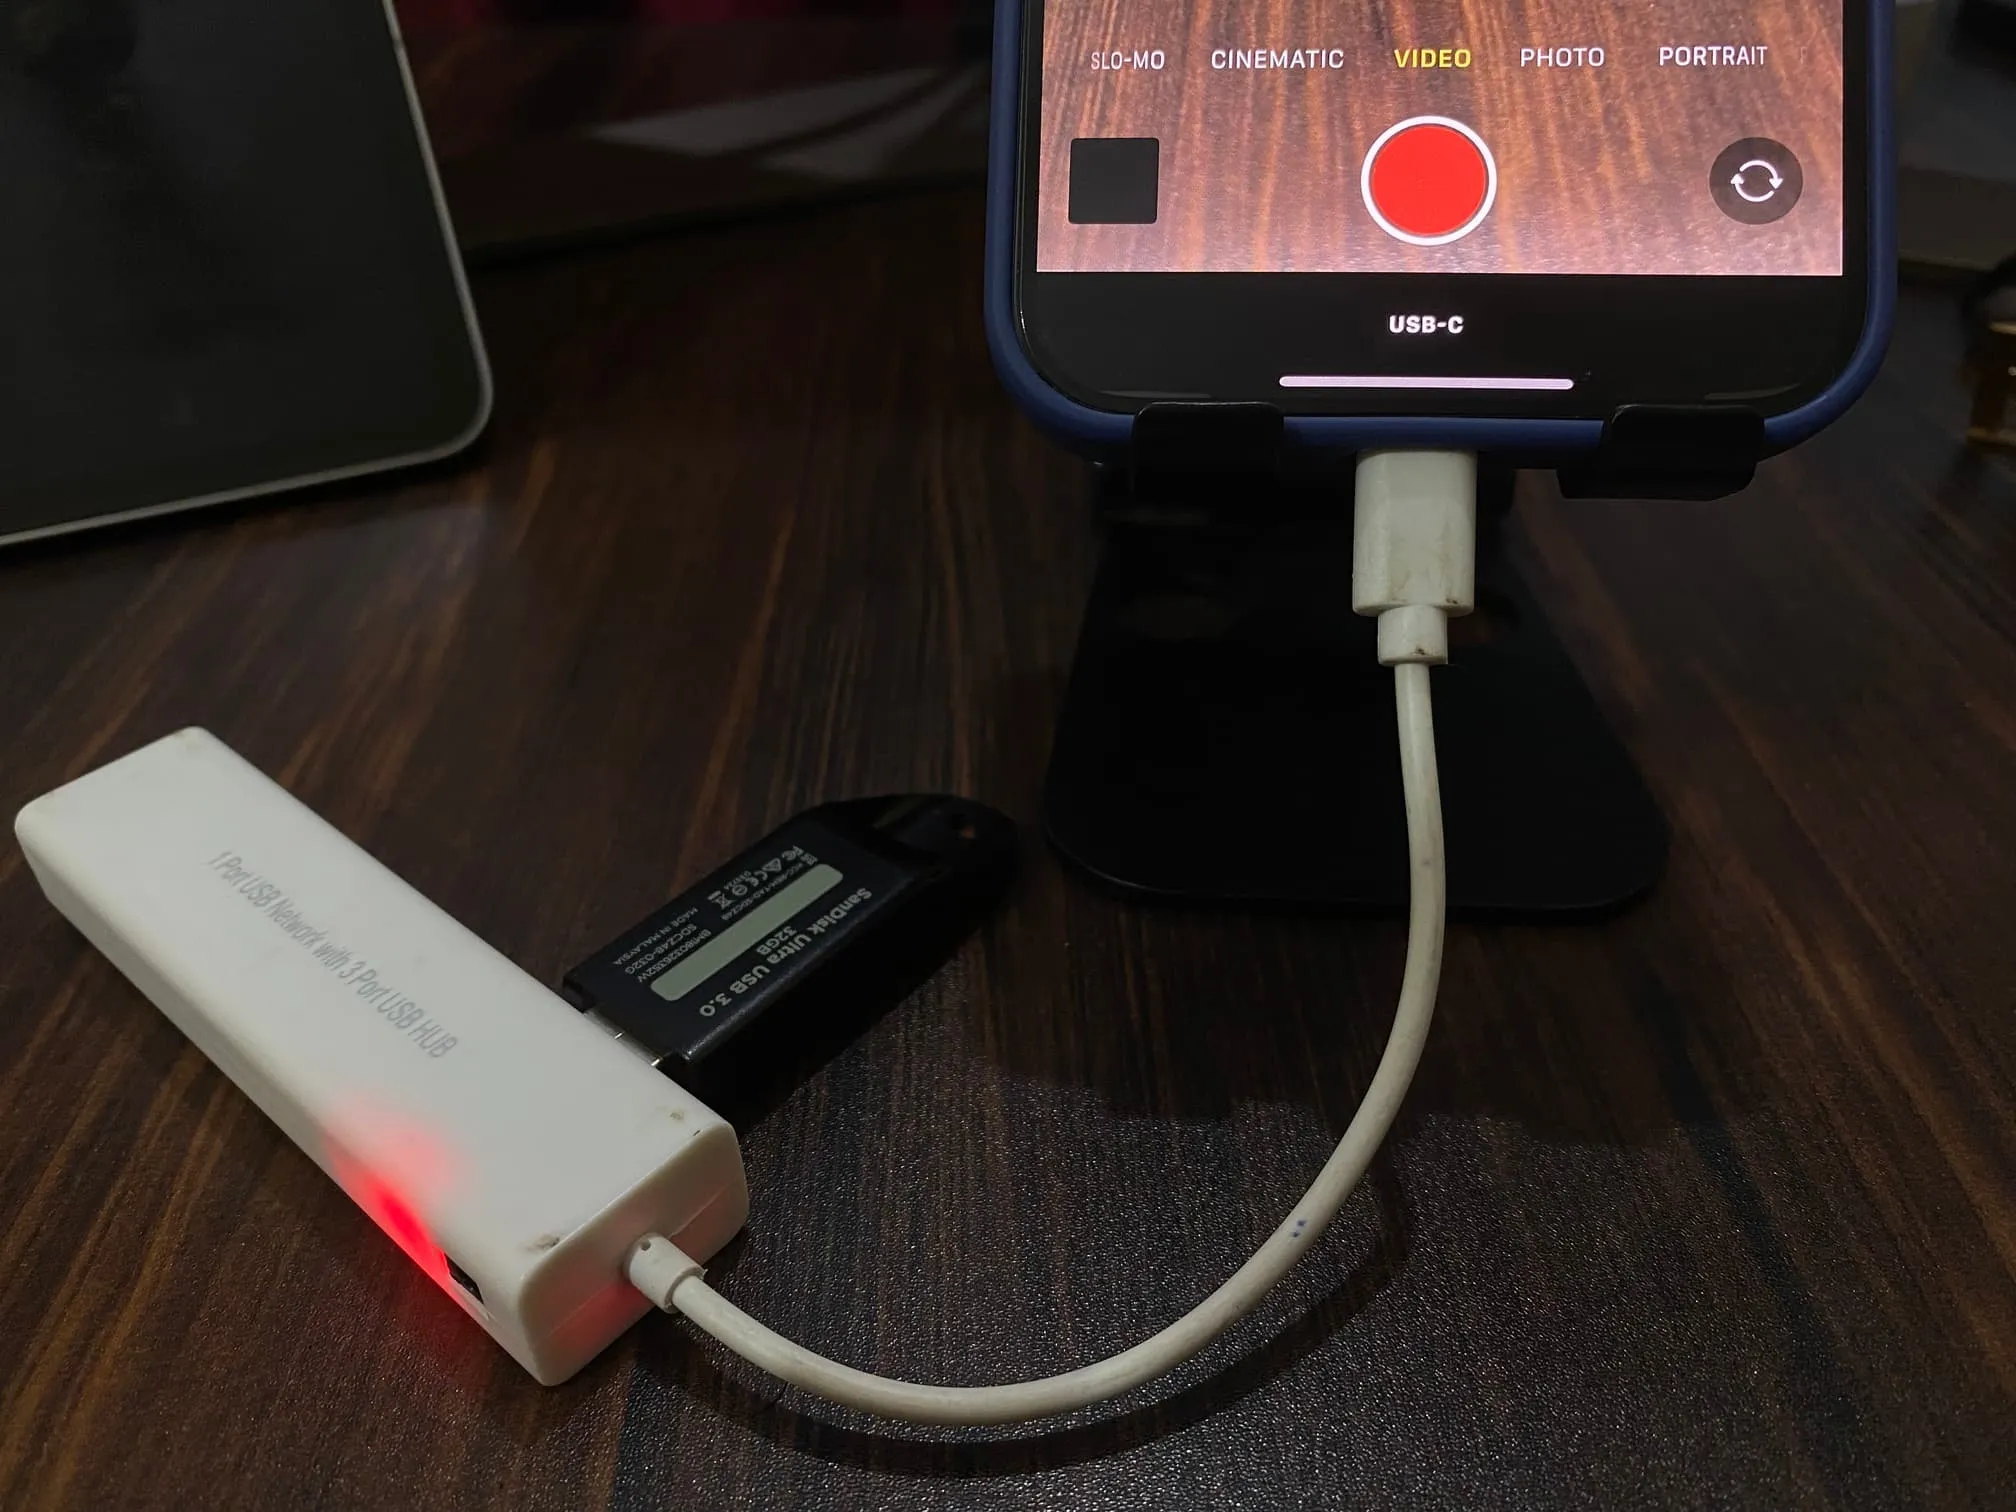 USB-Stick über USB-C-Dongle mit dem iPhone verbunden